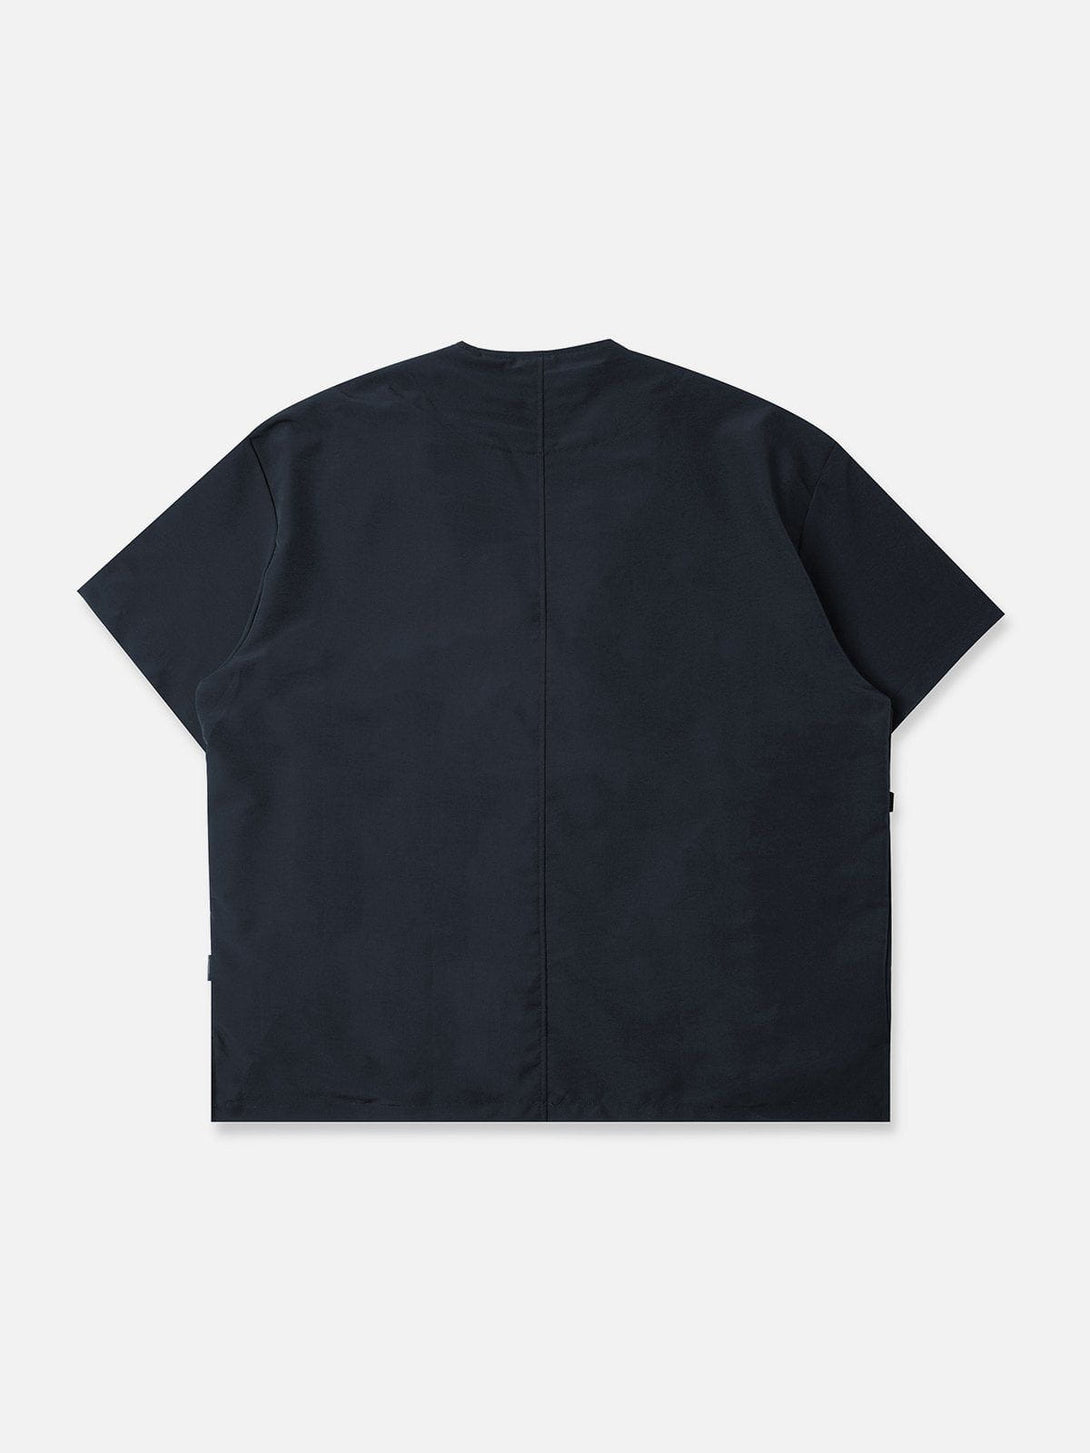 AlanBalen® - Solid No Pocket Short Sleeve Shirts AlanBalen